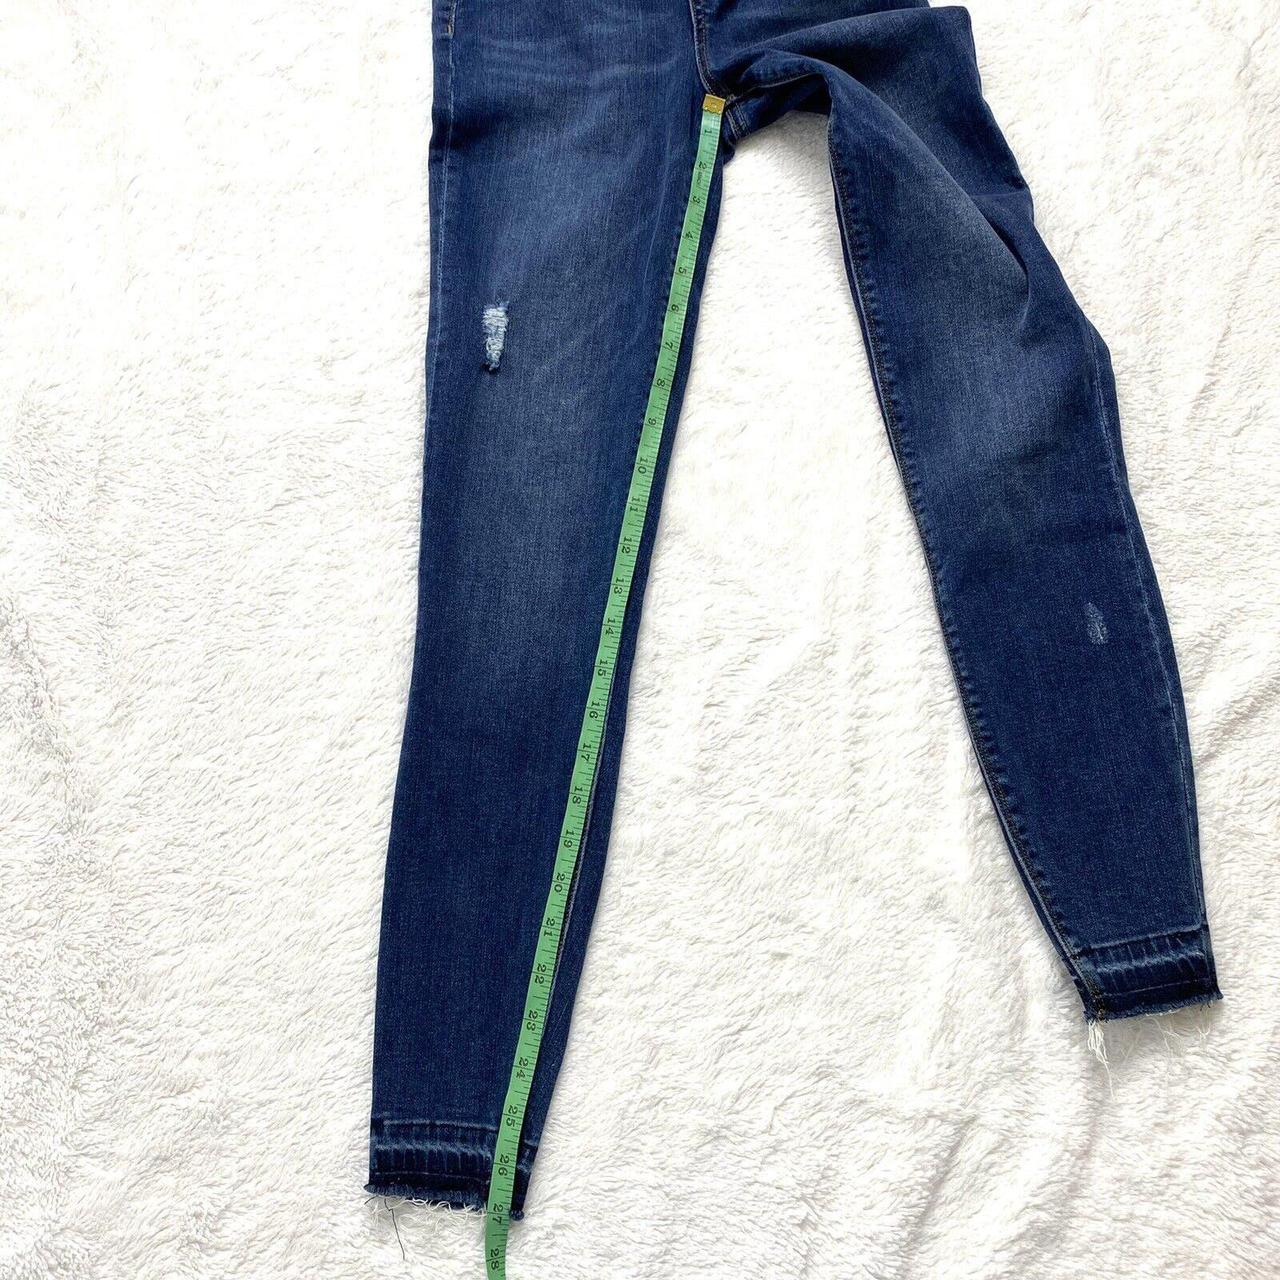 Spanx Distressed Denim Leggings Medium Wash jeans - Depop